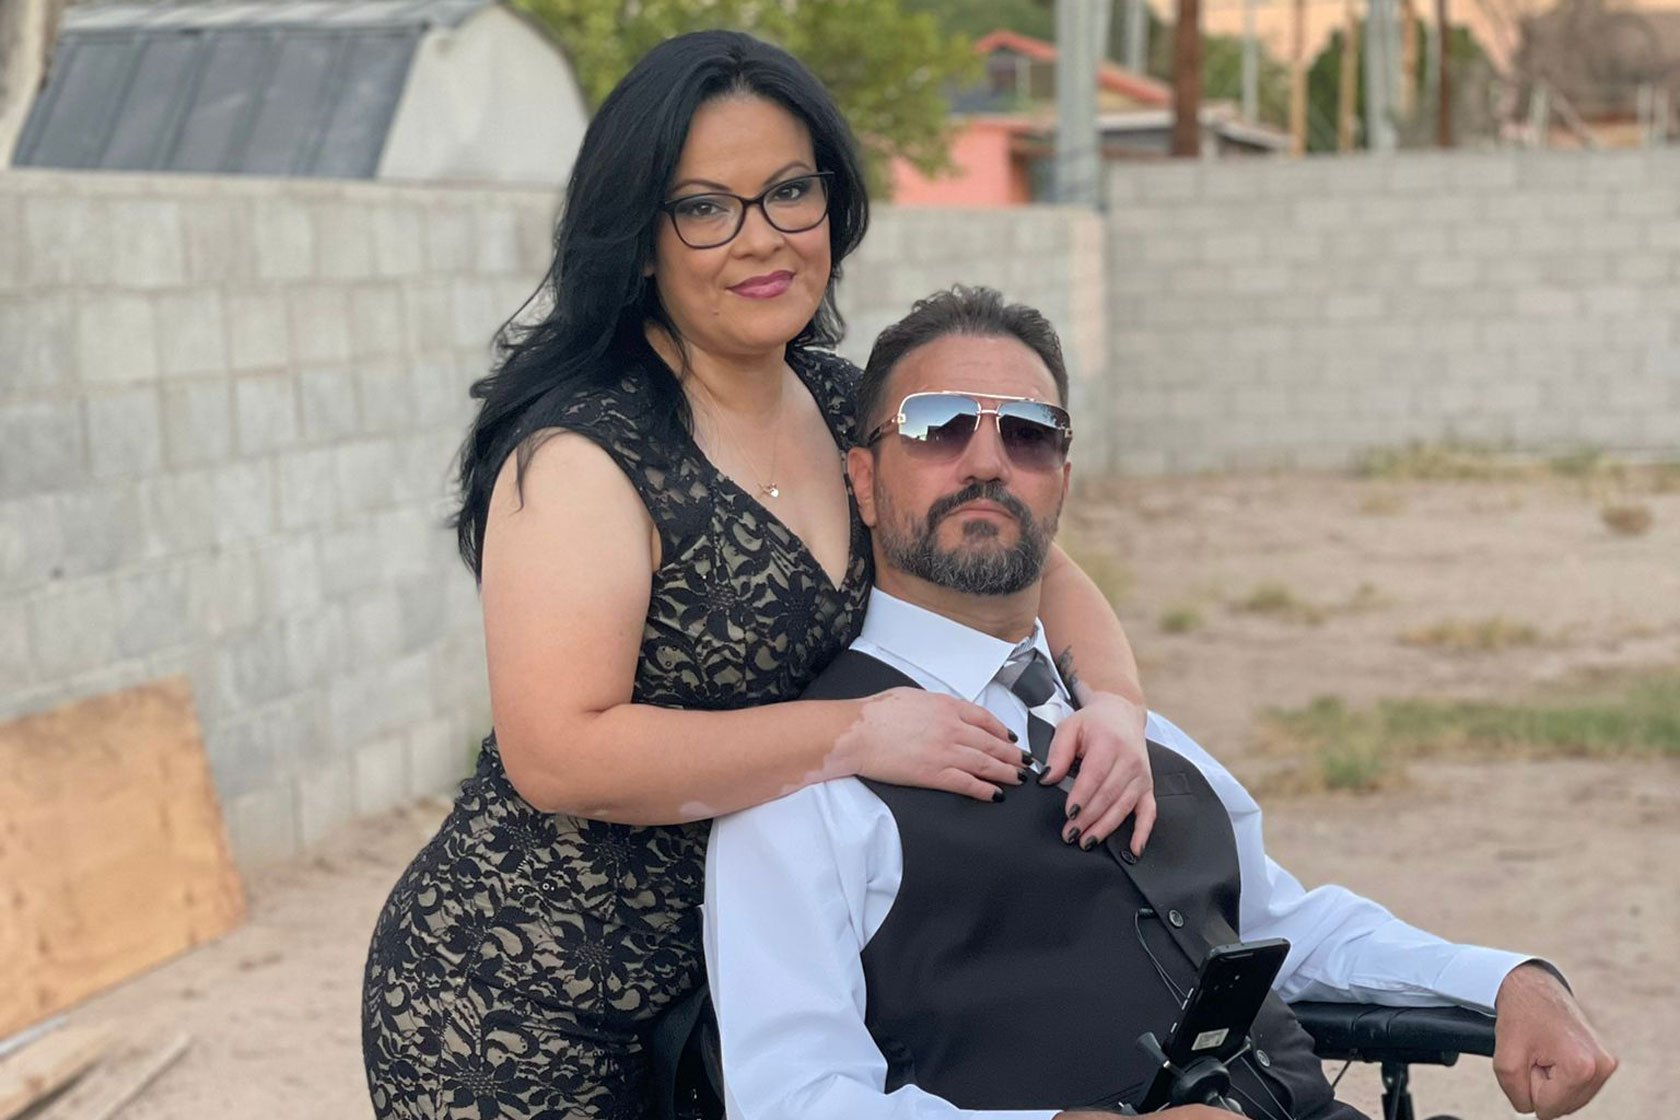 Marcos Castillo and his girlfriend, Mina Lopez, are pictured in November 2021. (Photo credit: Marcos Castillo) 